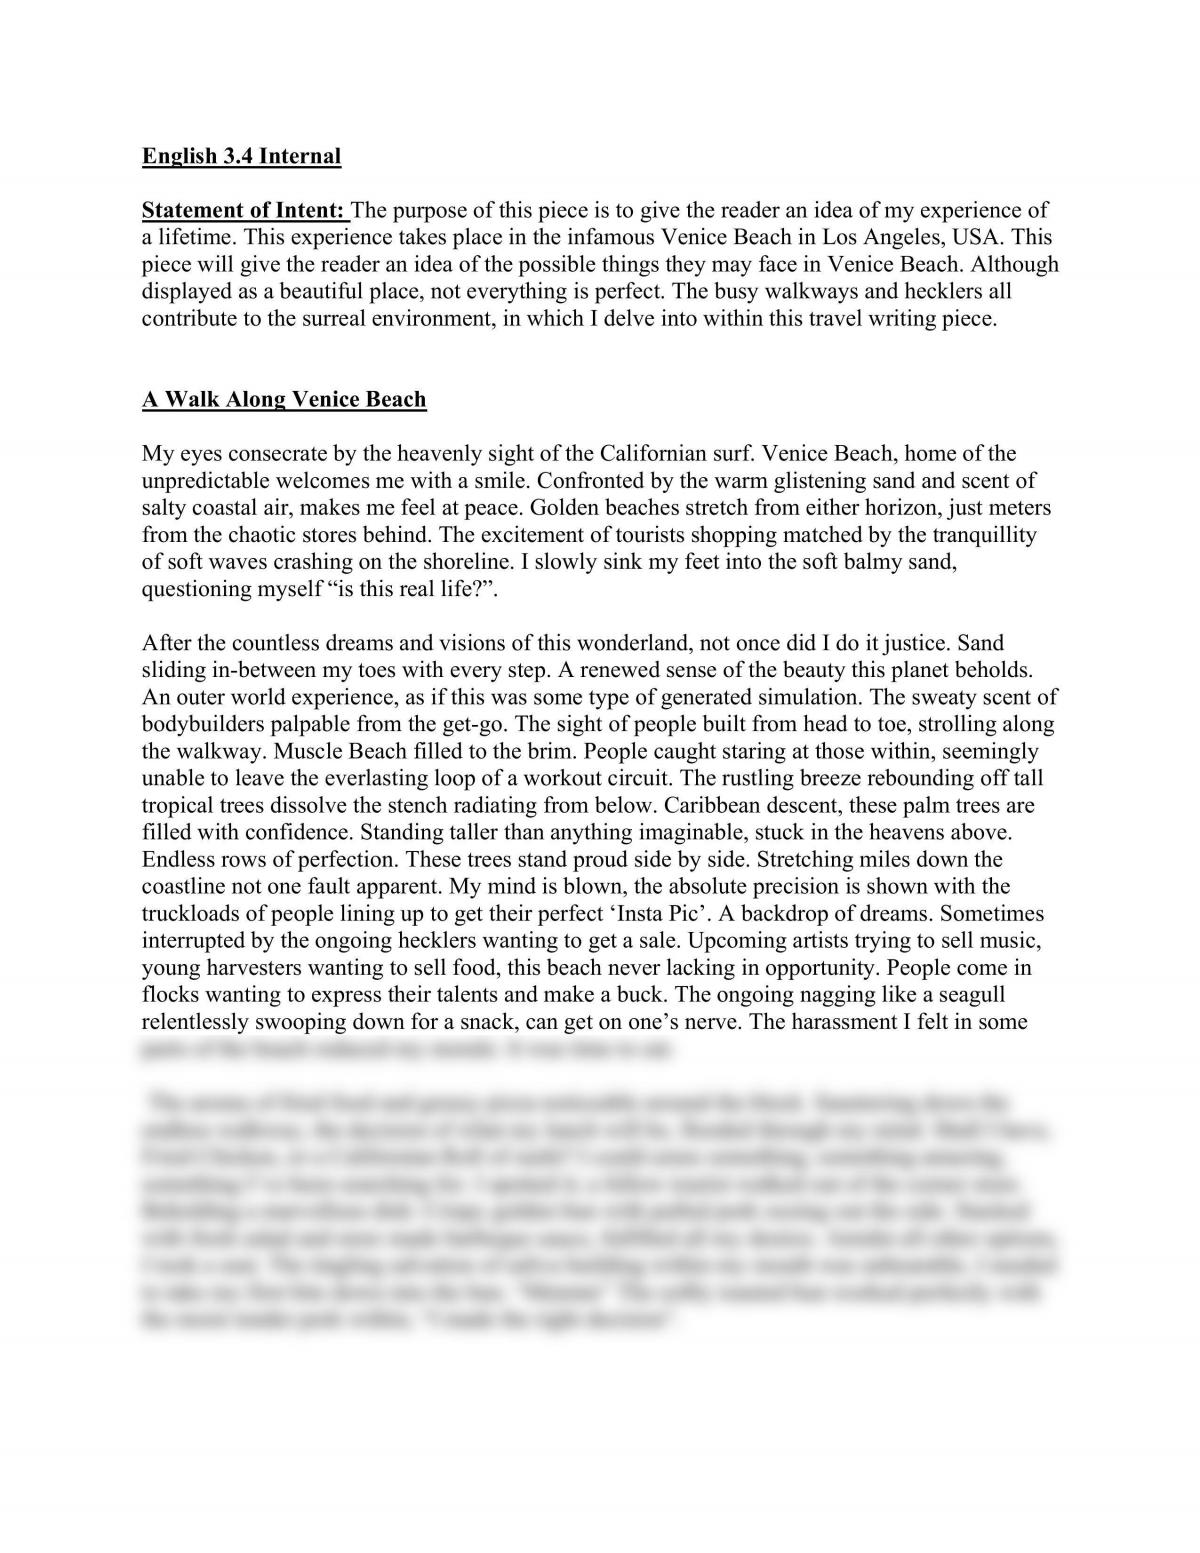 NCEA English 3.4 Internal - Page 1